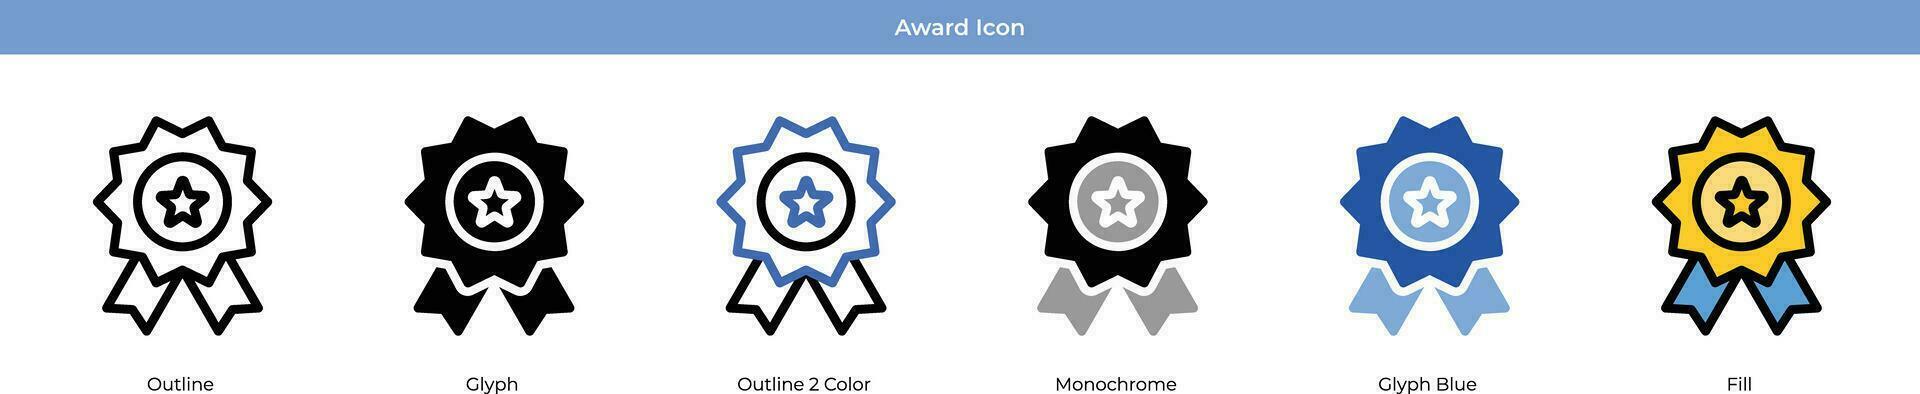 award pictogramserie vector